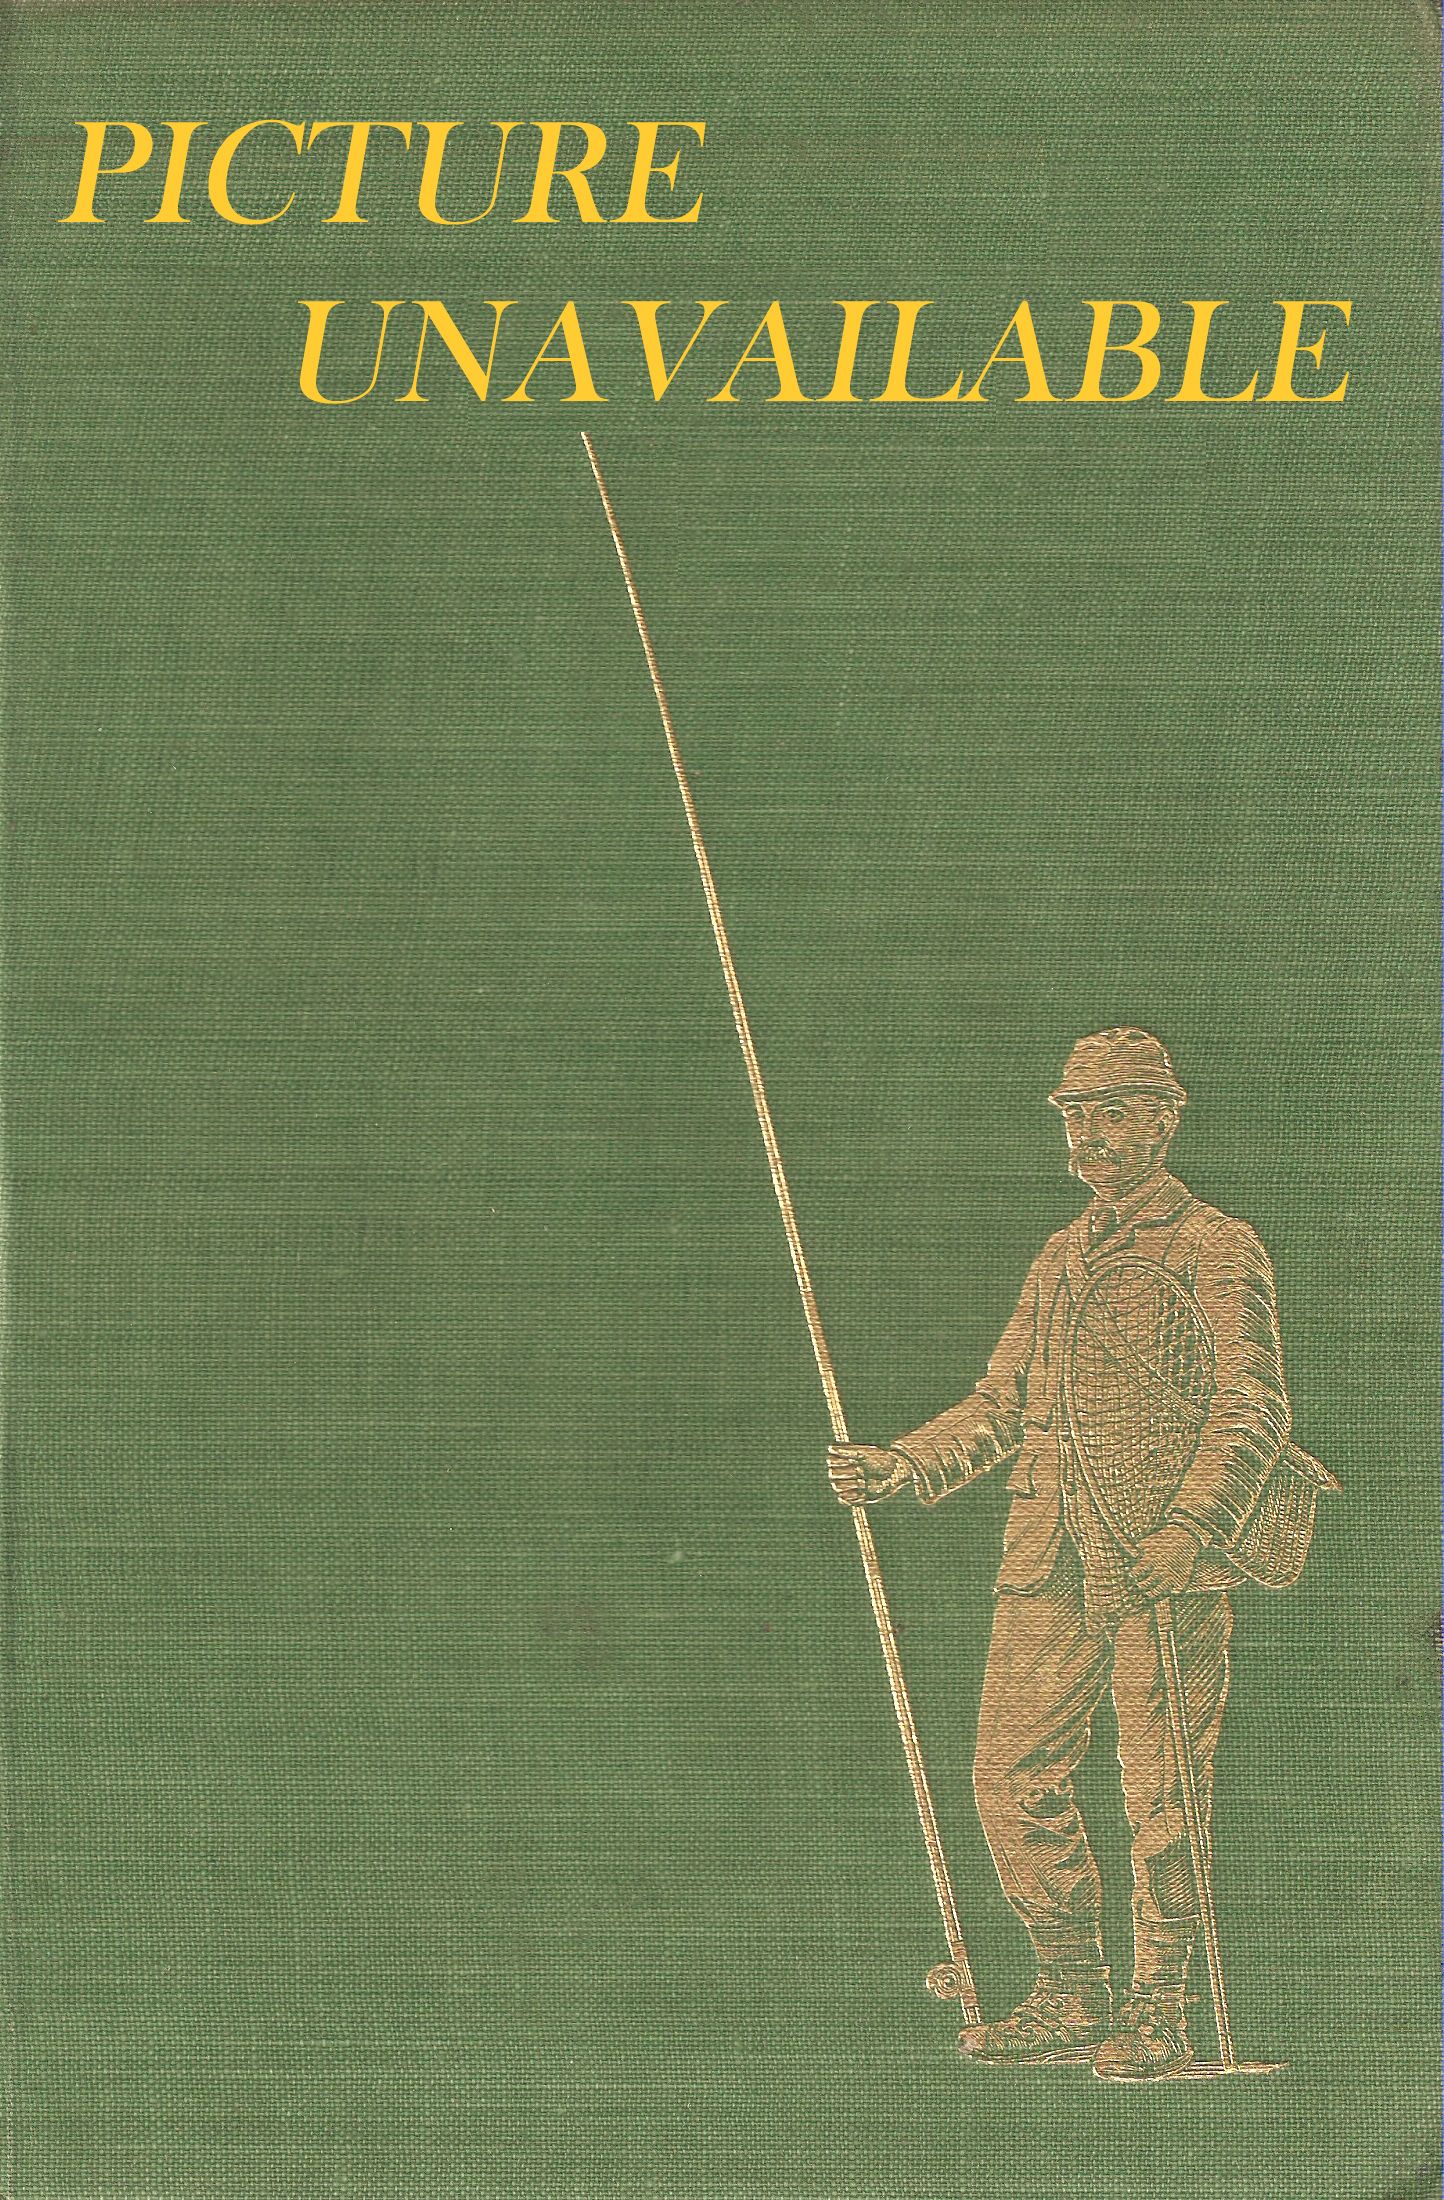 MR CRABTREE'S FISHING GIFT BOOK. Edited by Michael Prichard.